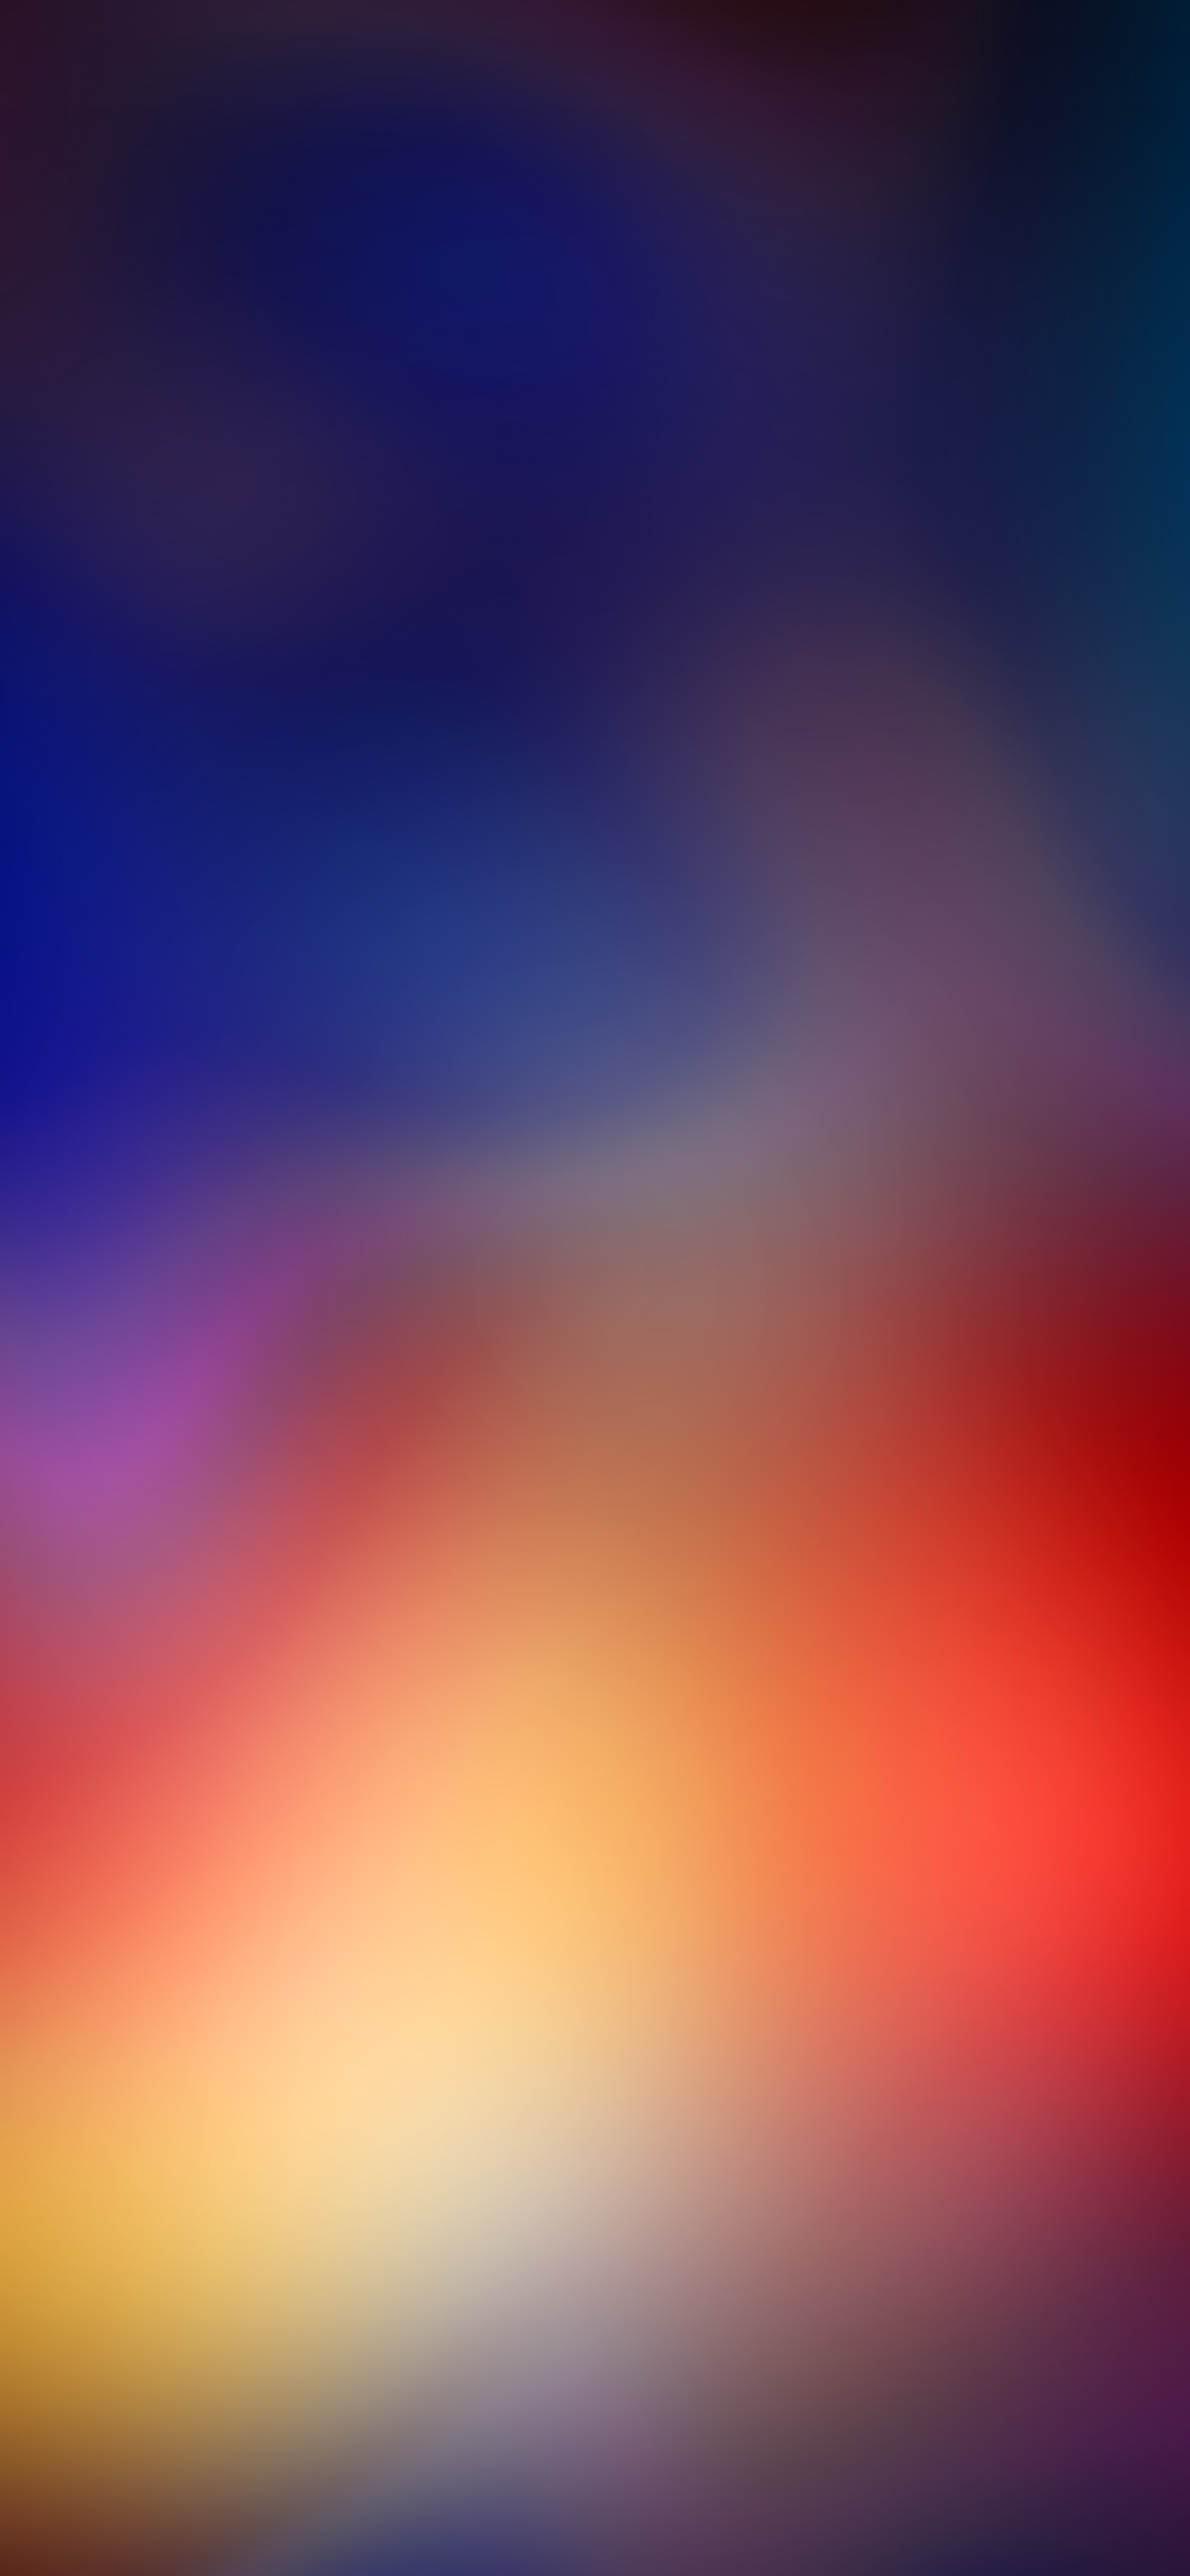 General 2250x4872 iPhone iOS iPad iPod vertical portrait display gradient